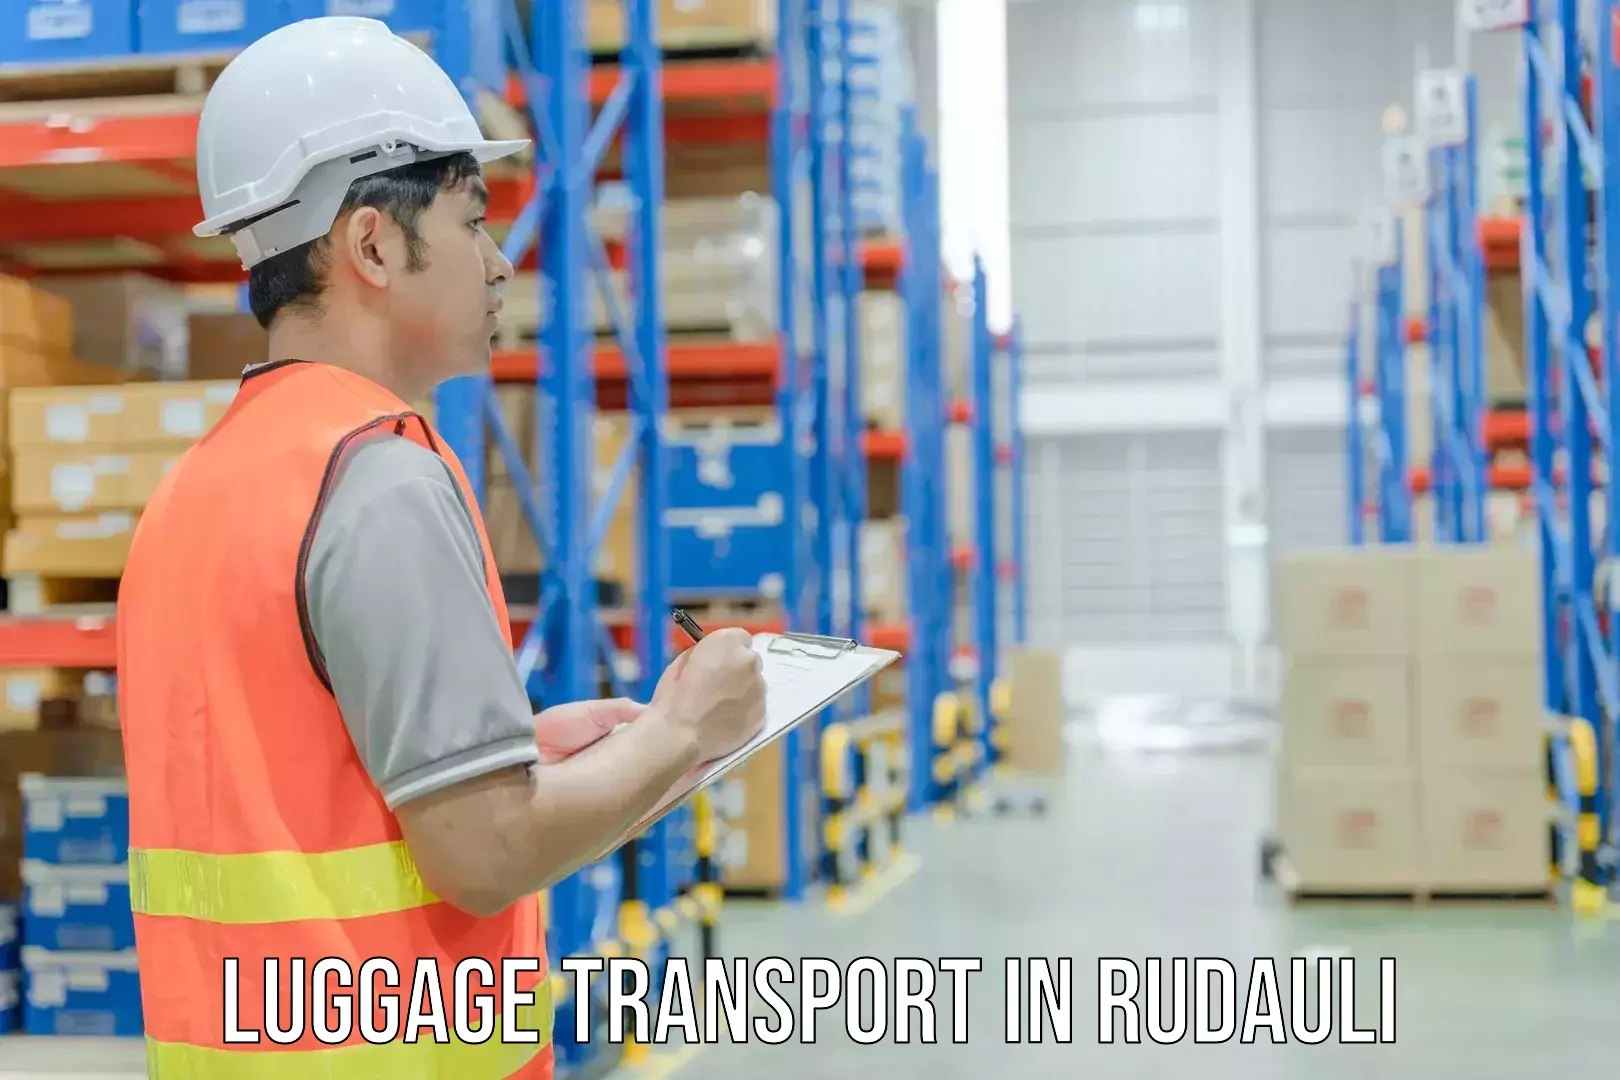 Luggage transport service in Rudauli